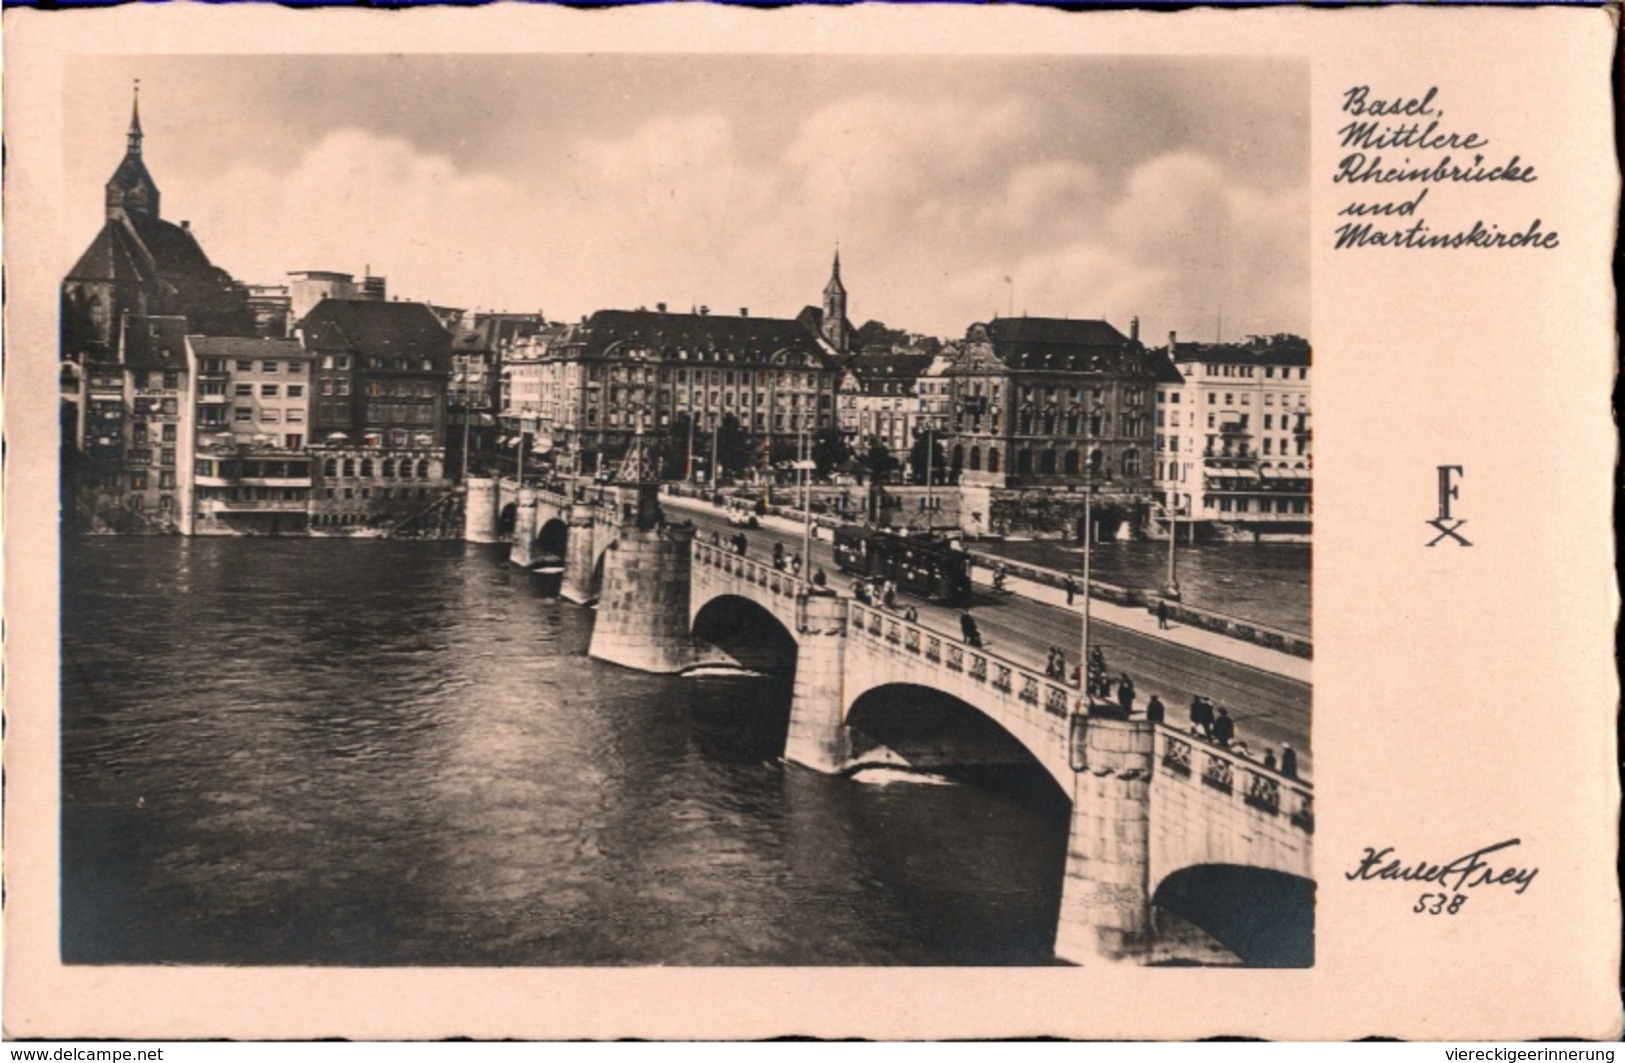 ! 1948 Foto Ansichtskarte Basel, Rheinbrücke, Straßenbahn, Tramway, Xaver Frey 538, Maschinenstempel Telefon, Telephon - Bâle